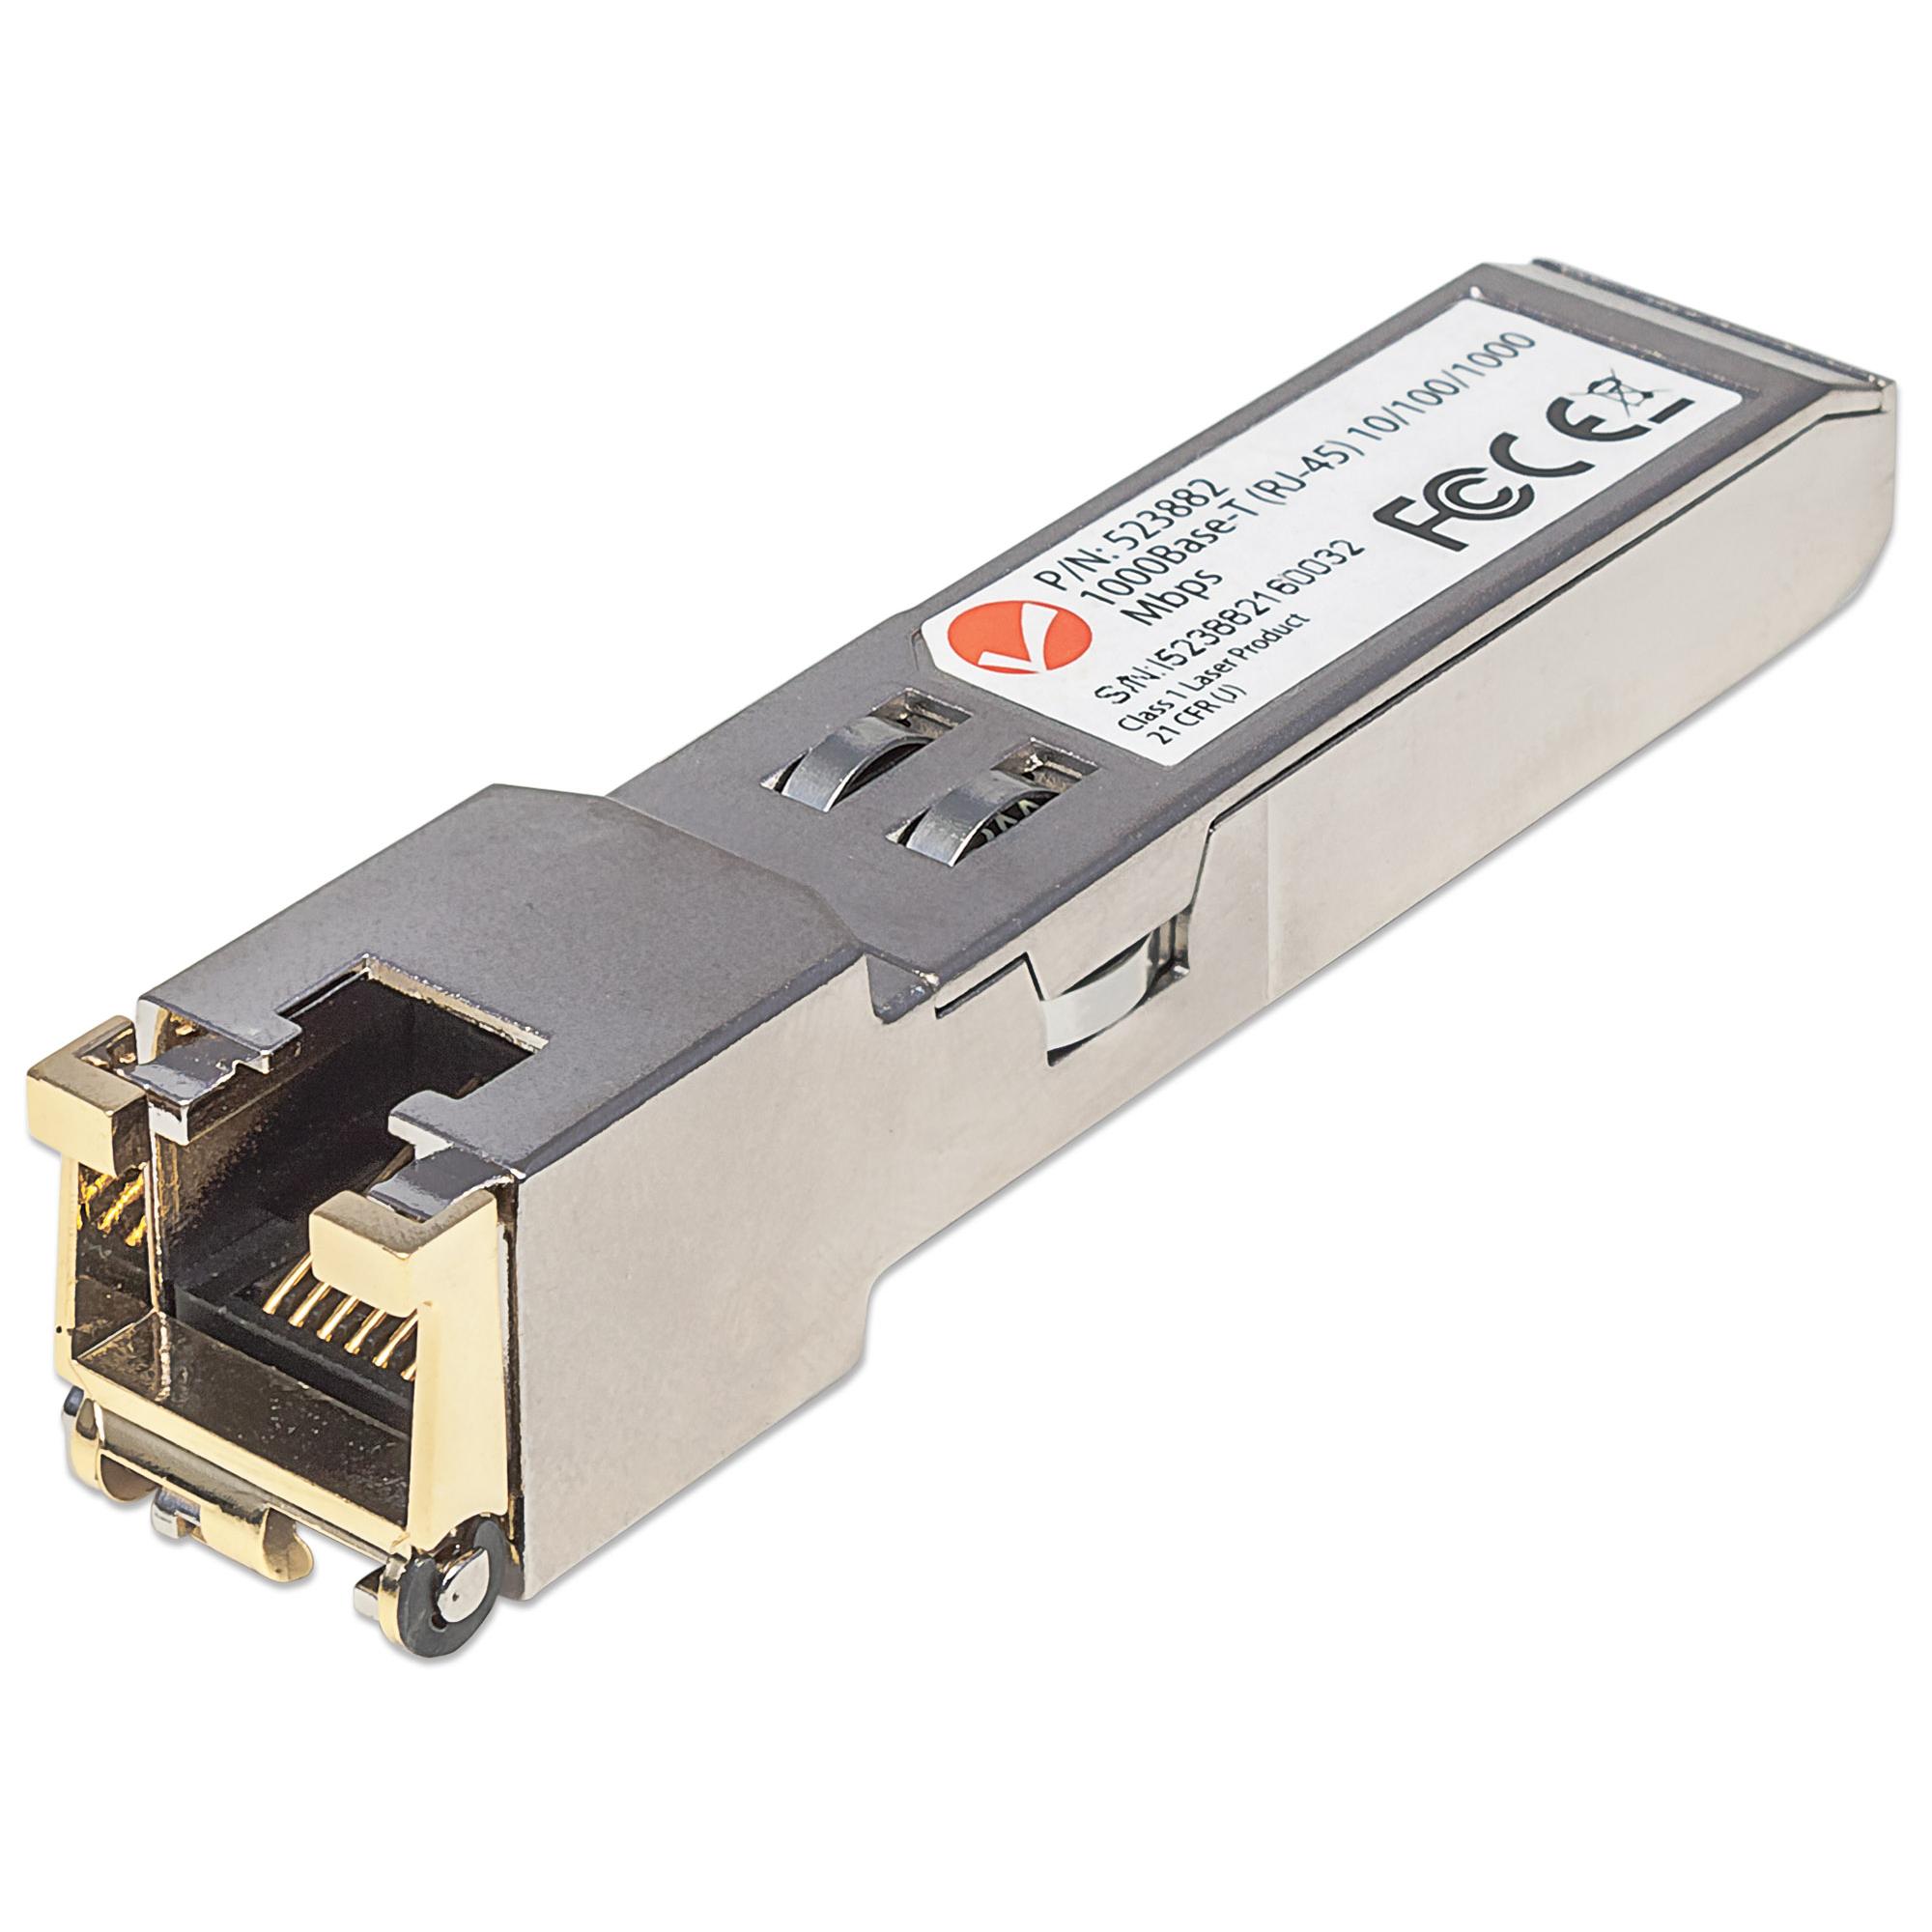 Transceiver Gigabit Ethernet SFP Mini-GBIC